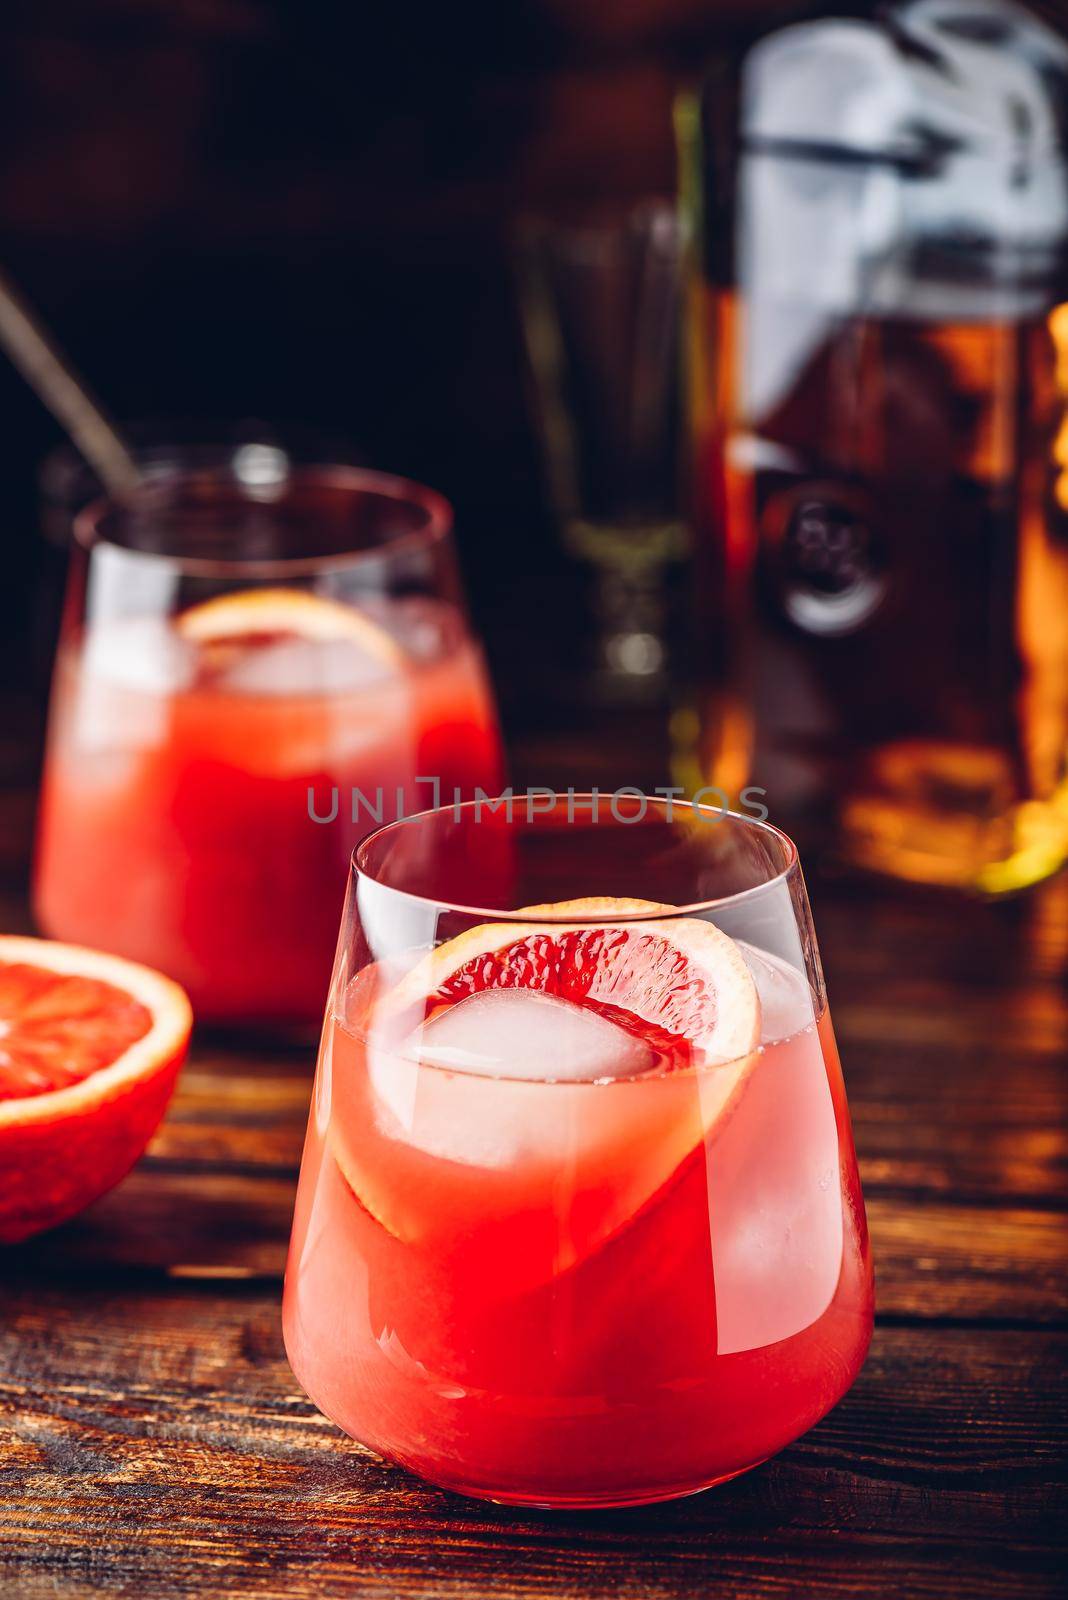 Whiskey sour cocktail by Seva_blsv